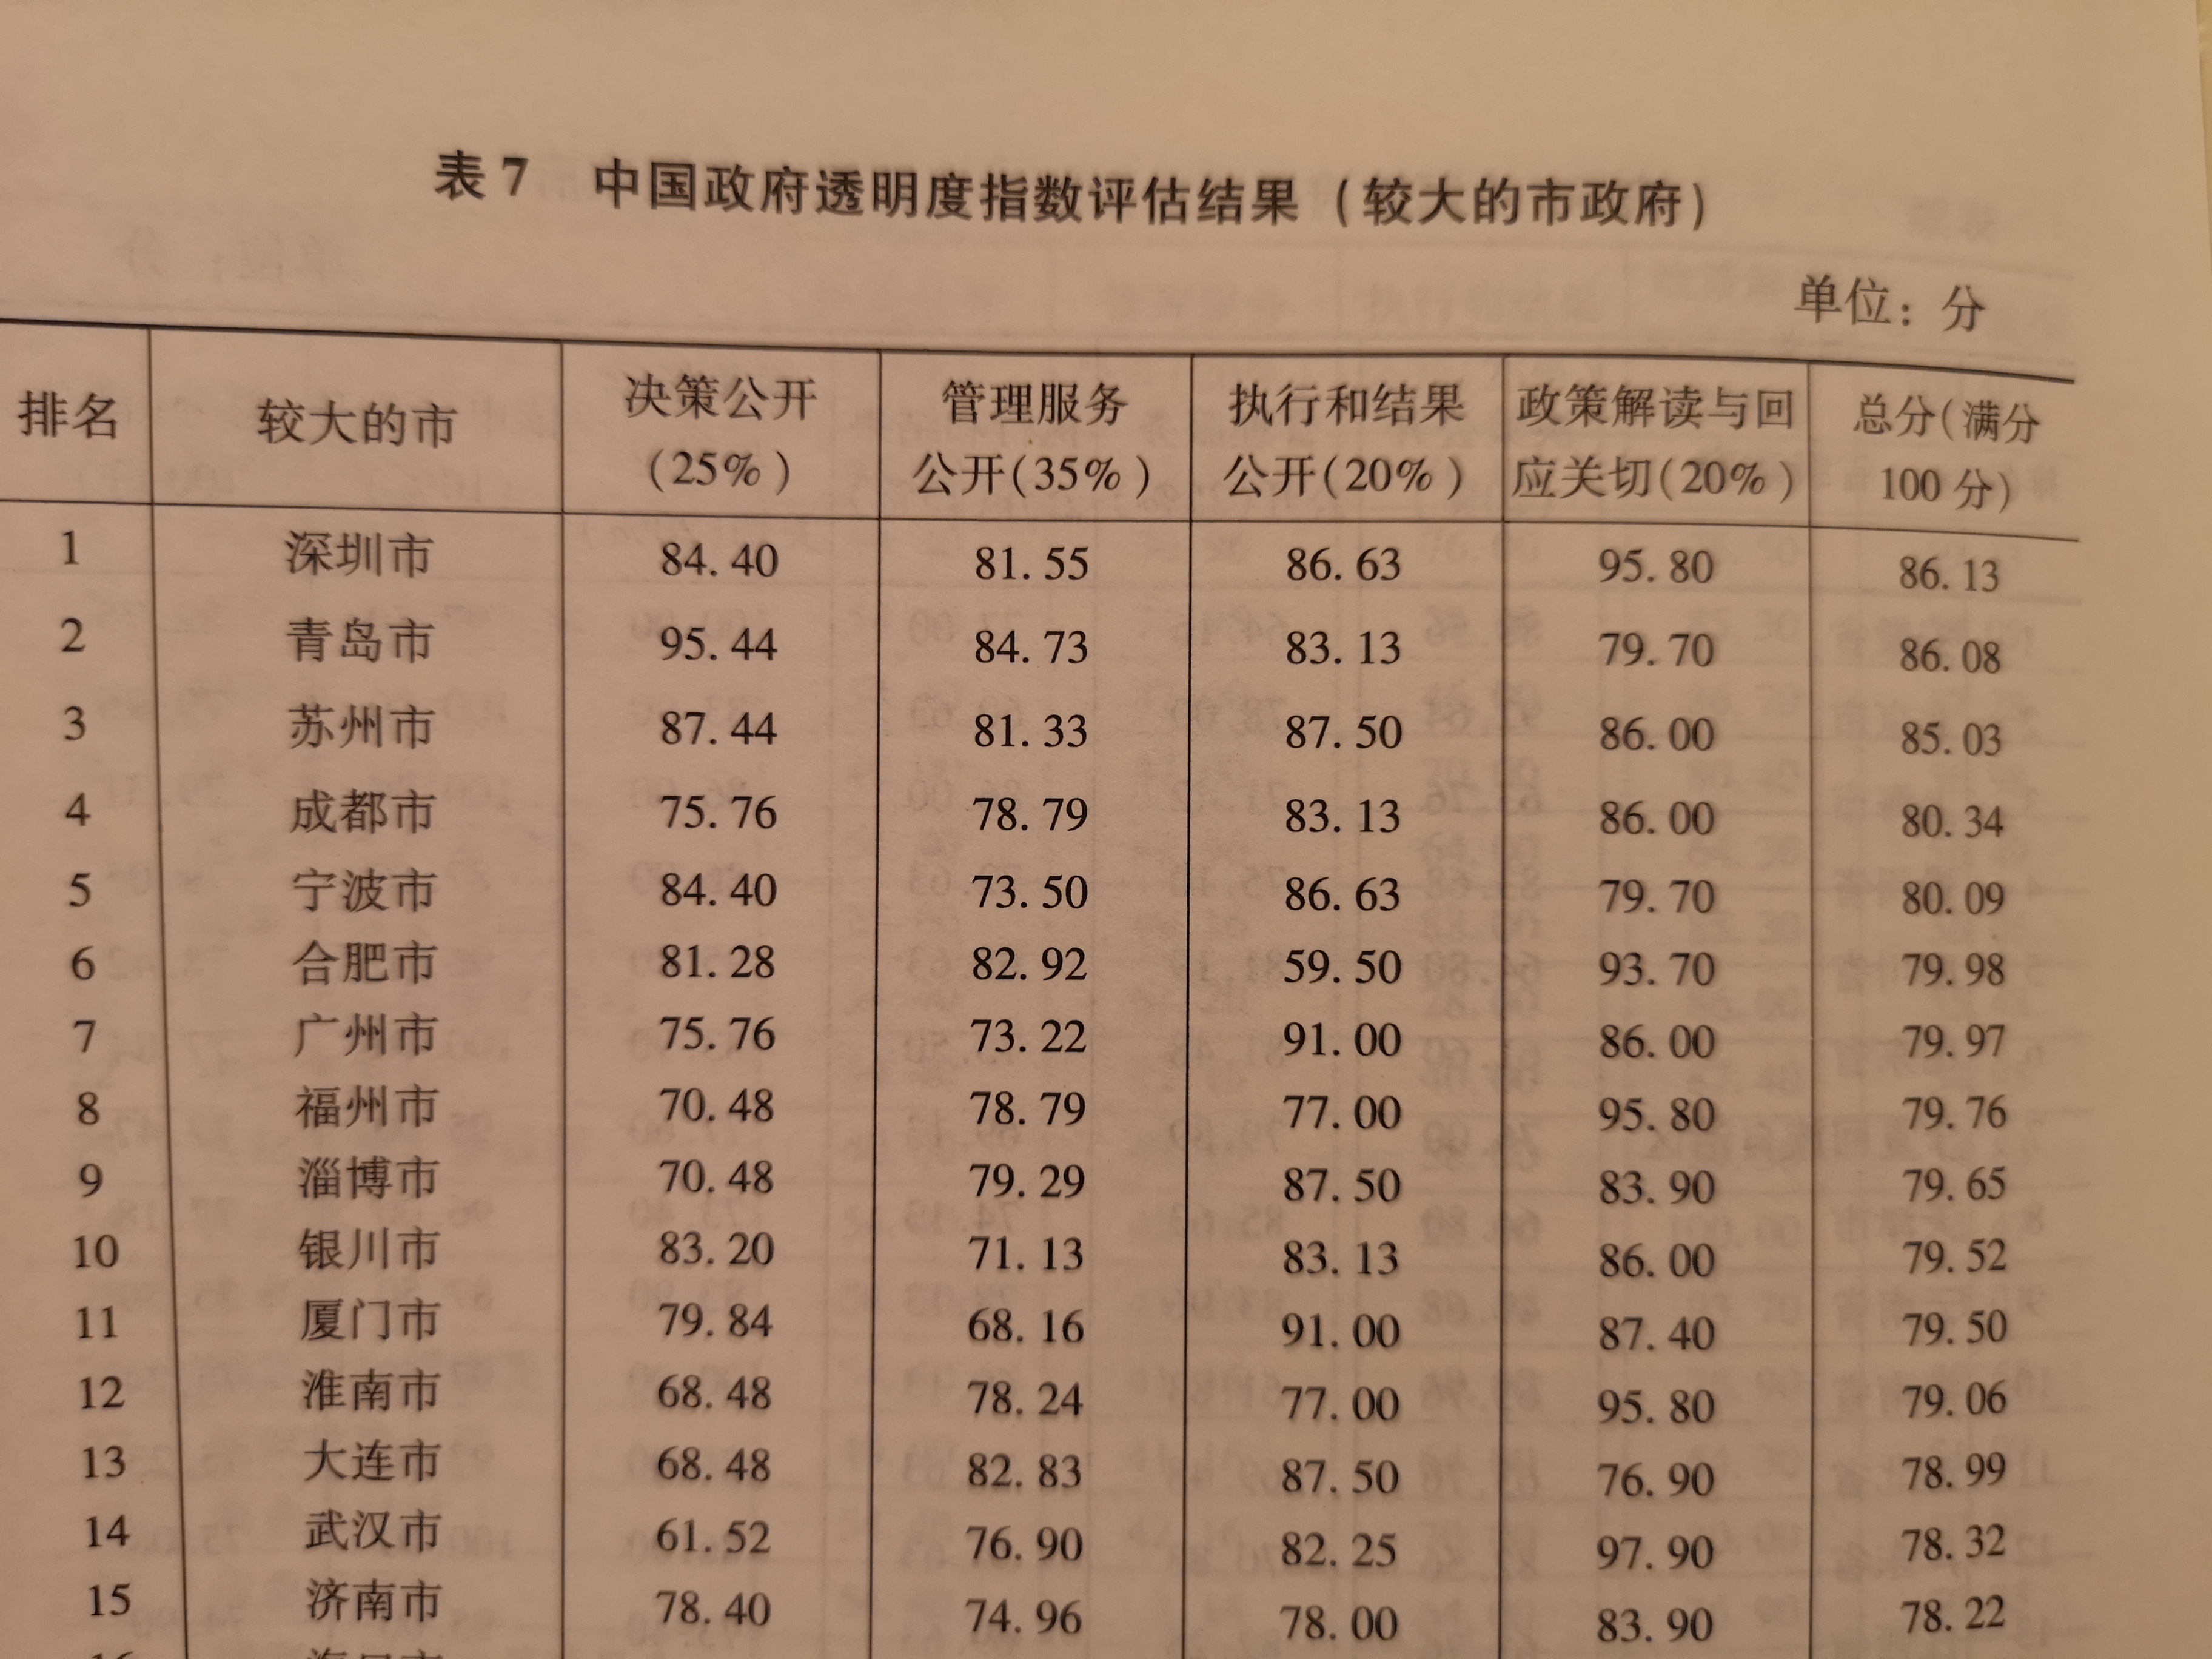 leyu70vip:中国政府透明度指数报告发布 淄博在全国49个大城市中排名第9